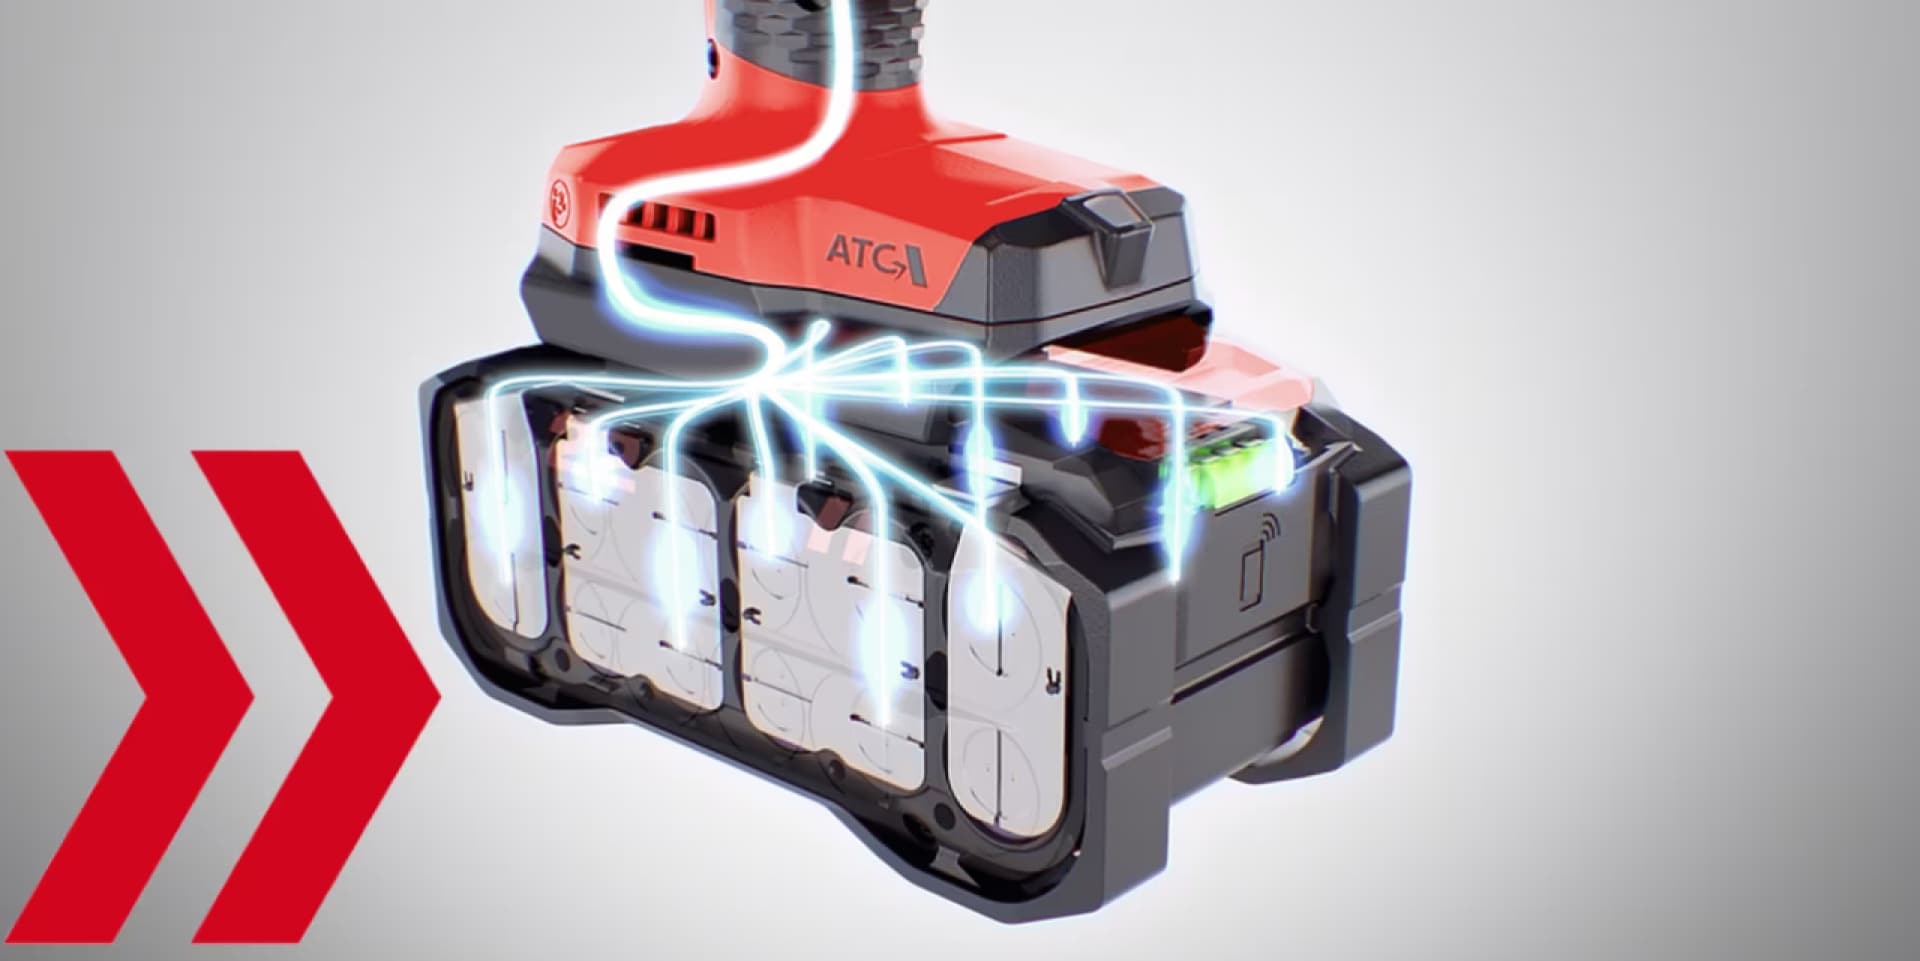 Nuron電池提供超強動力